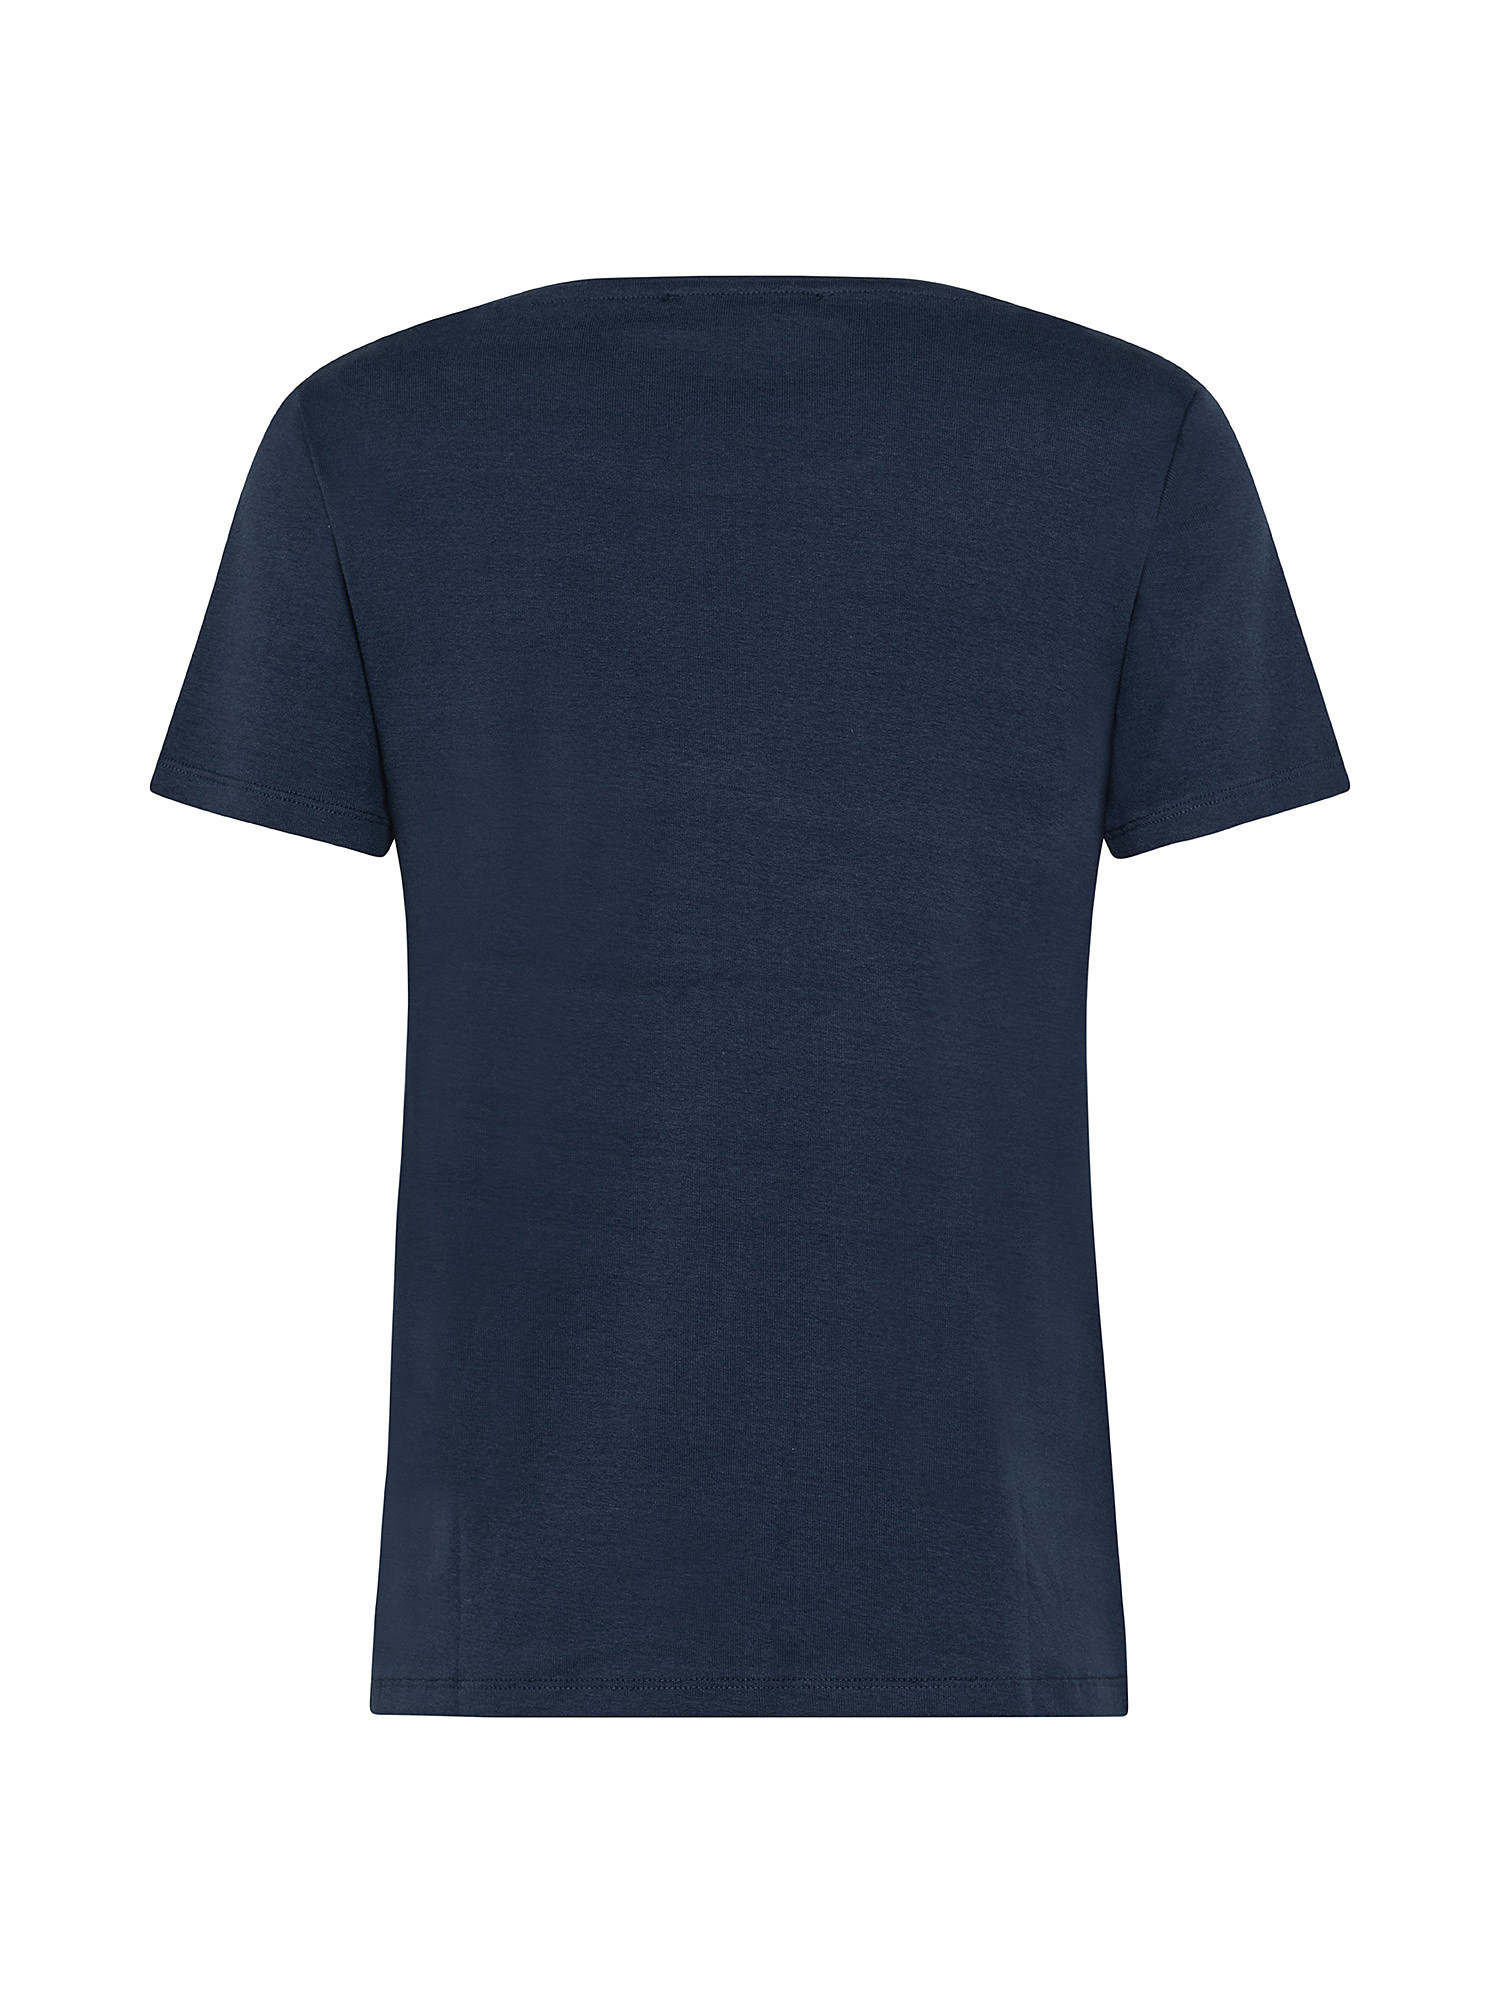 T-shirt with rhinestones, Blue, large image number 1